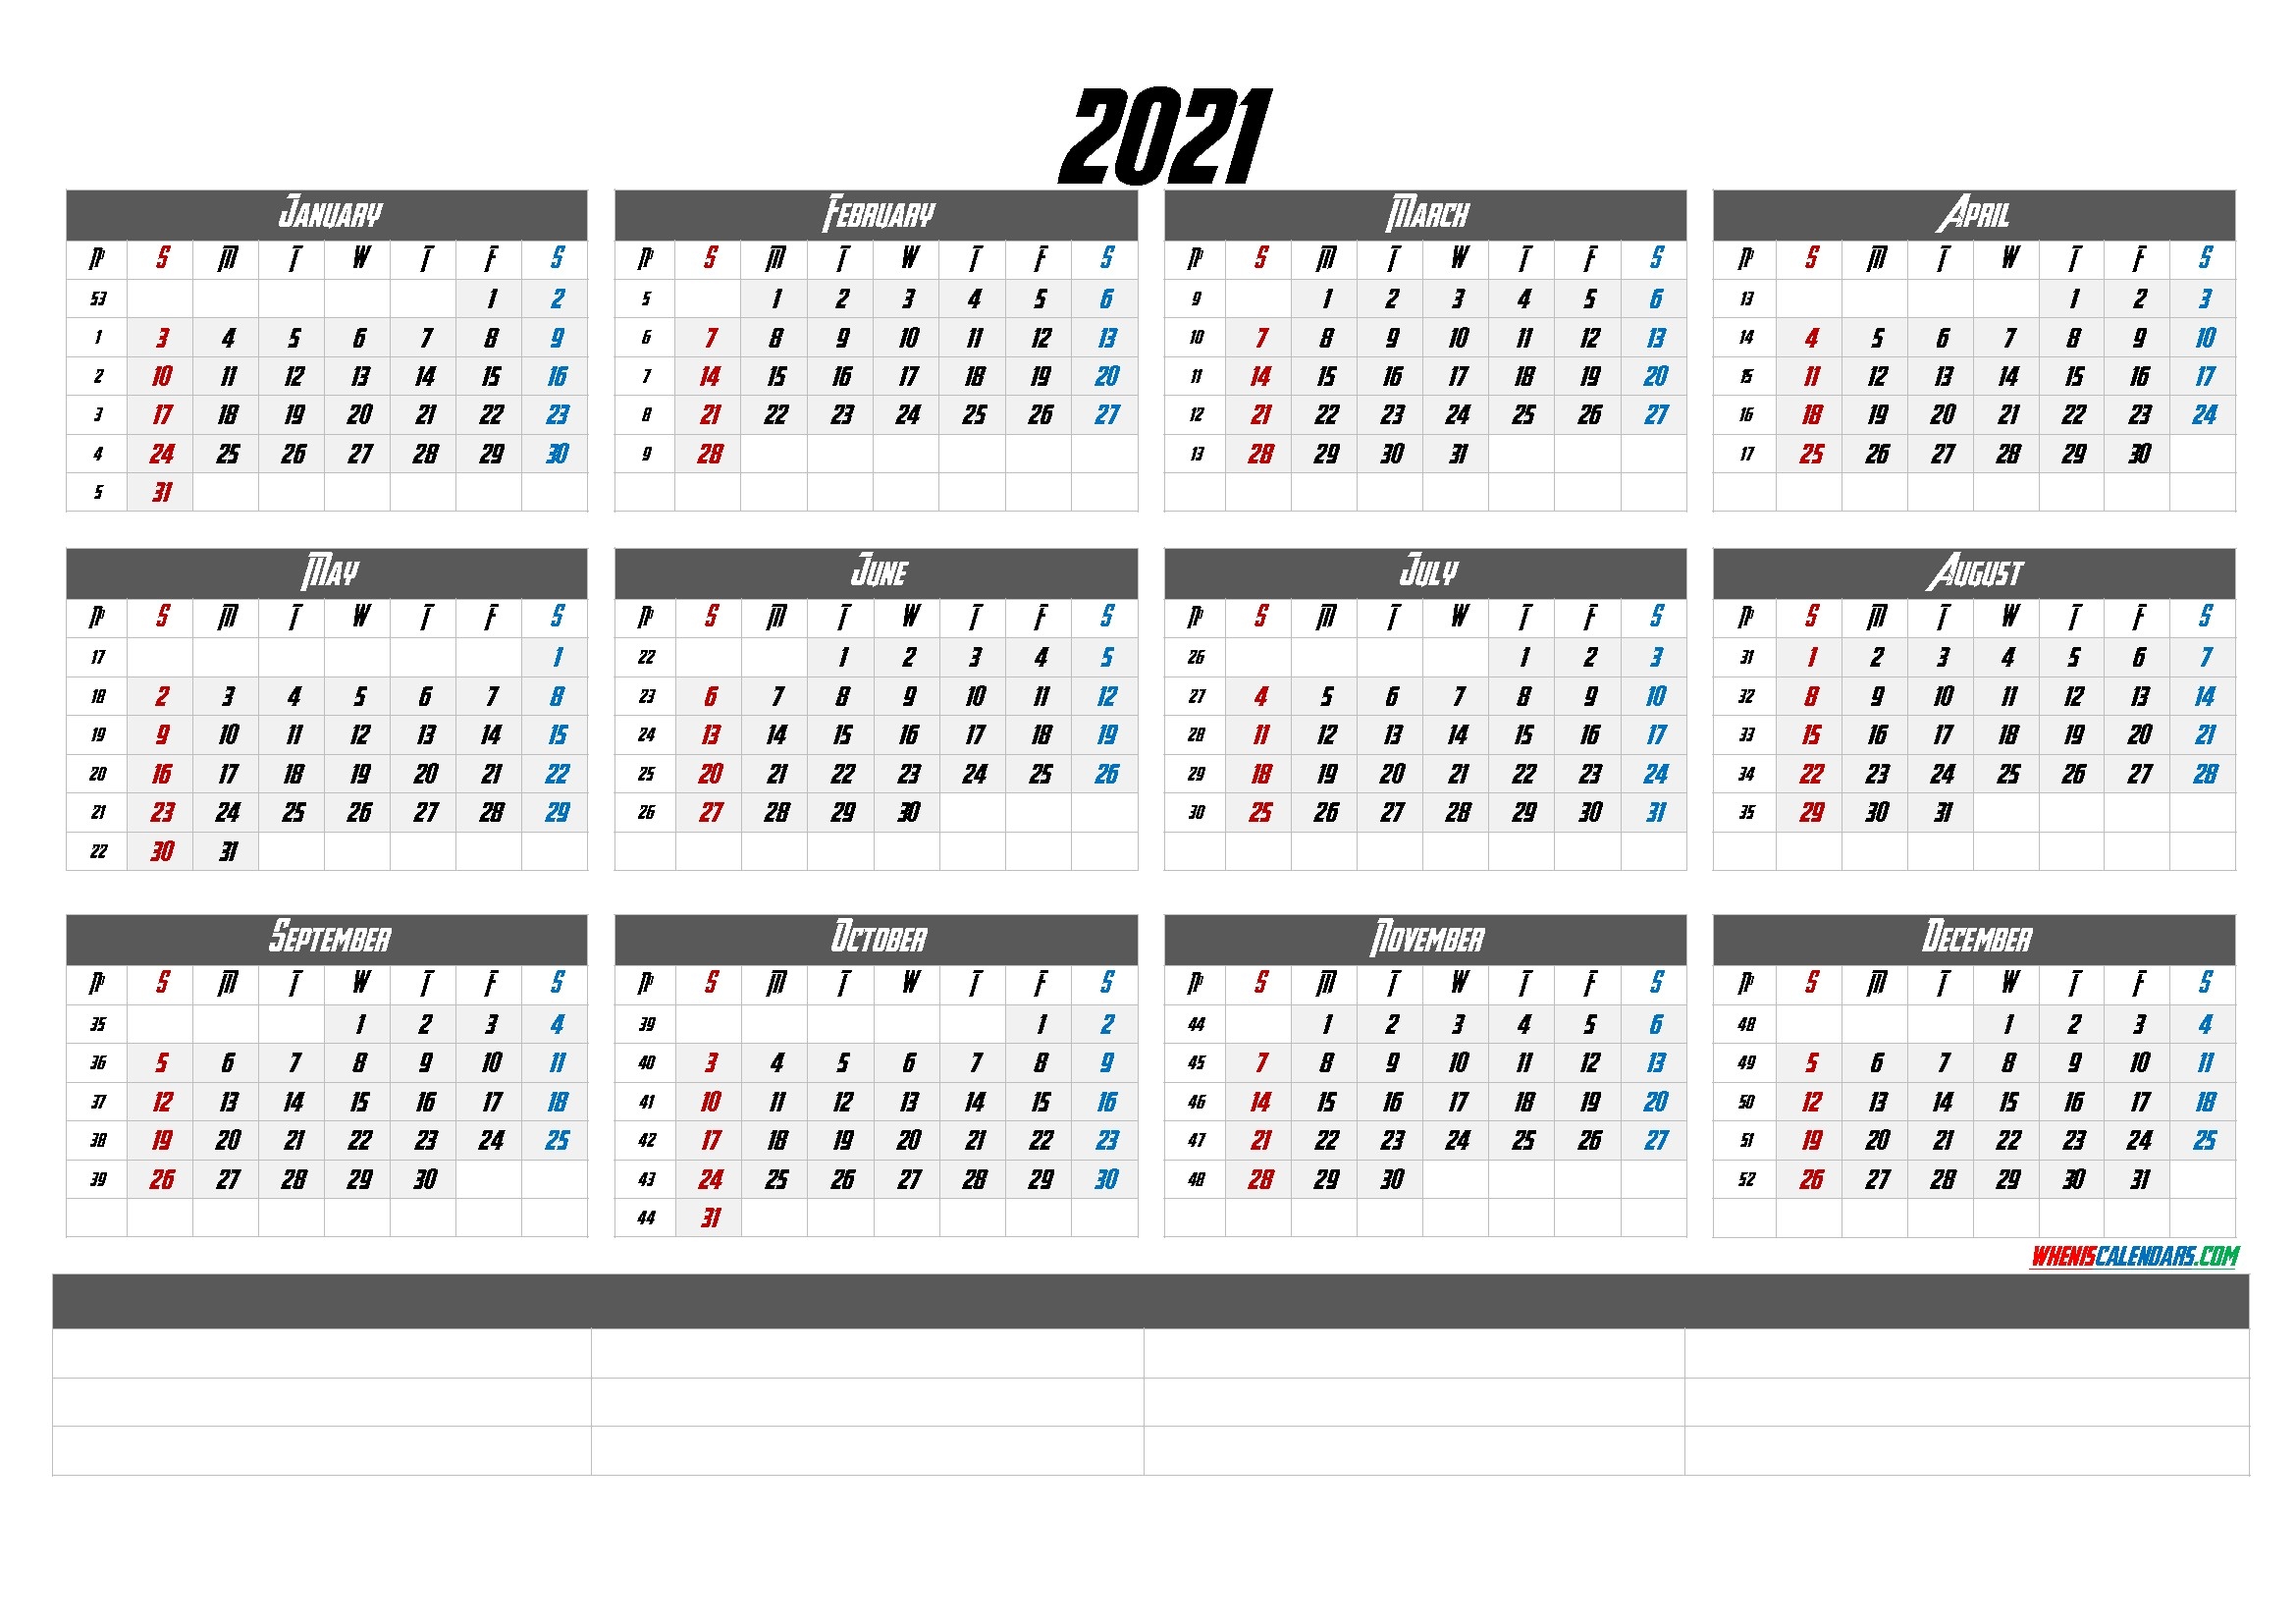 2021 Calendar Weeks Numbered - Template Calendar Design